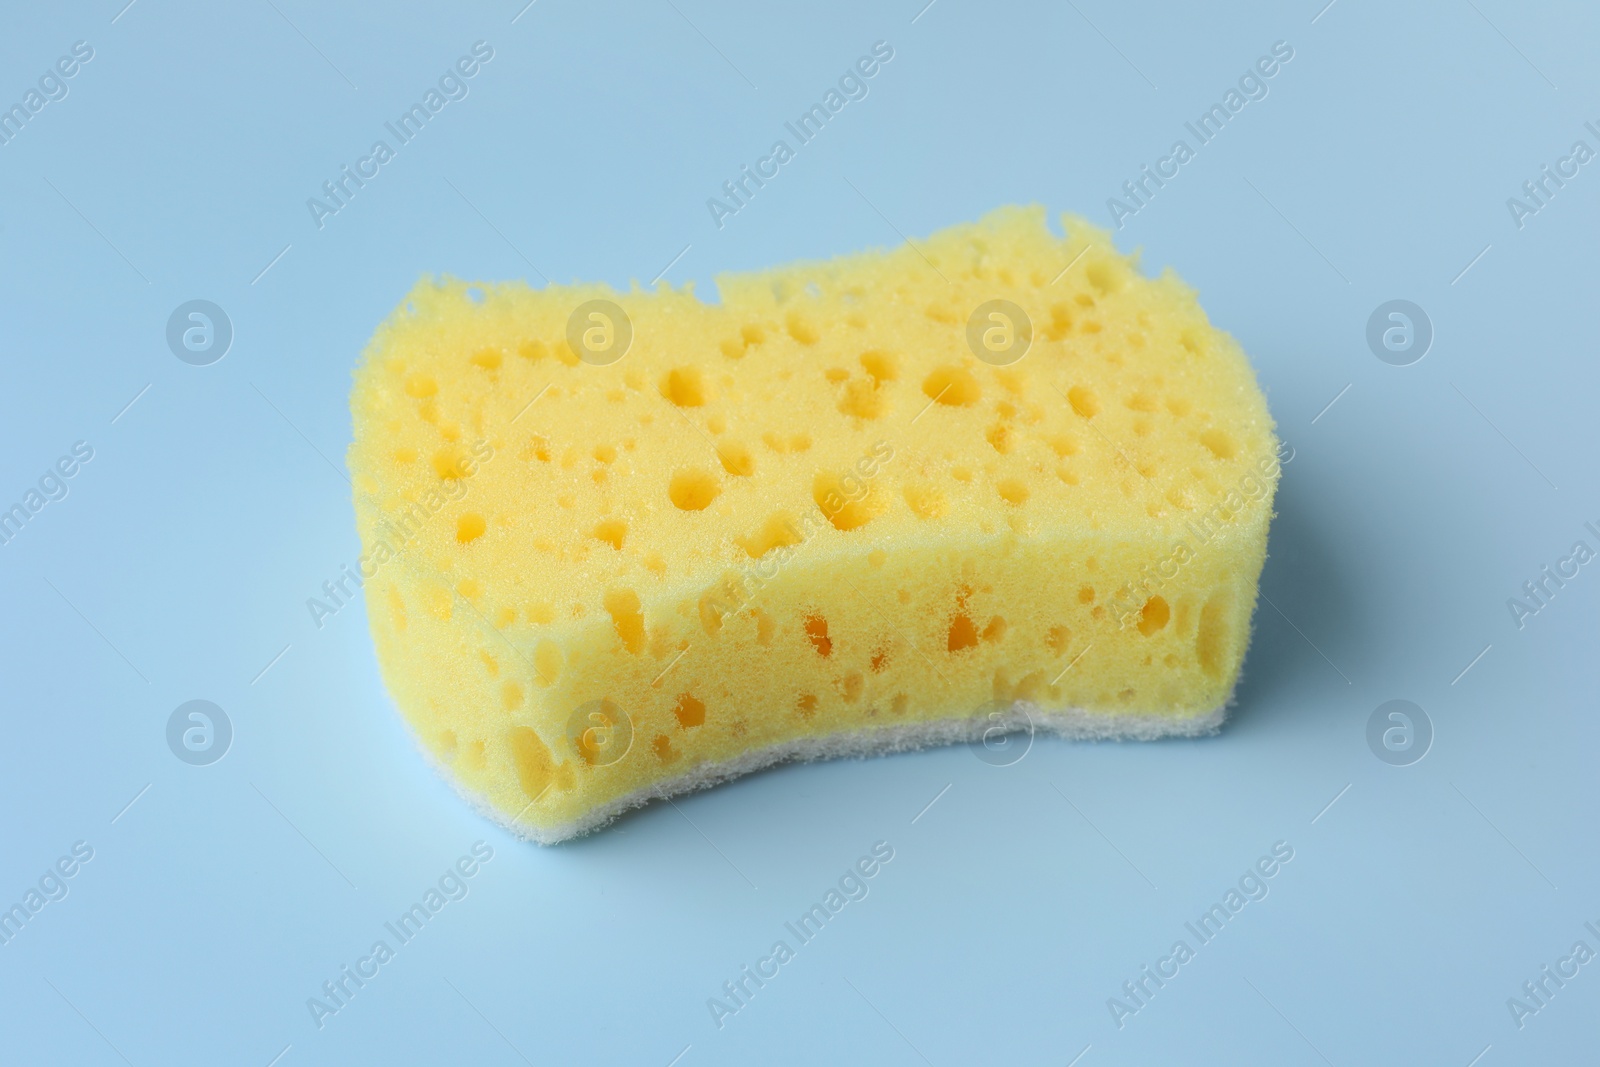 Photo of New yellow sponge on light blue background